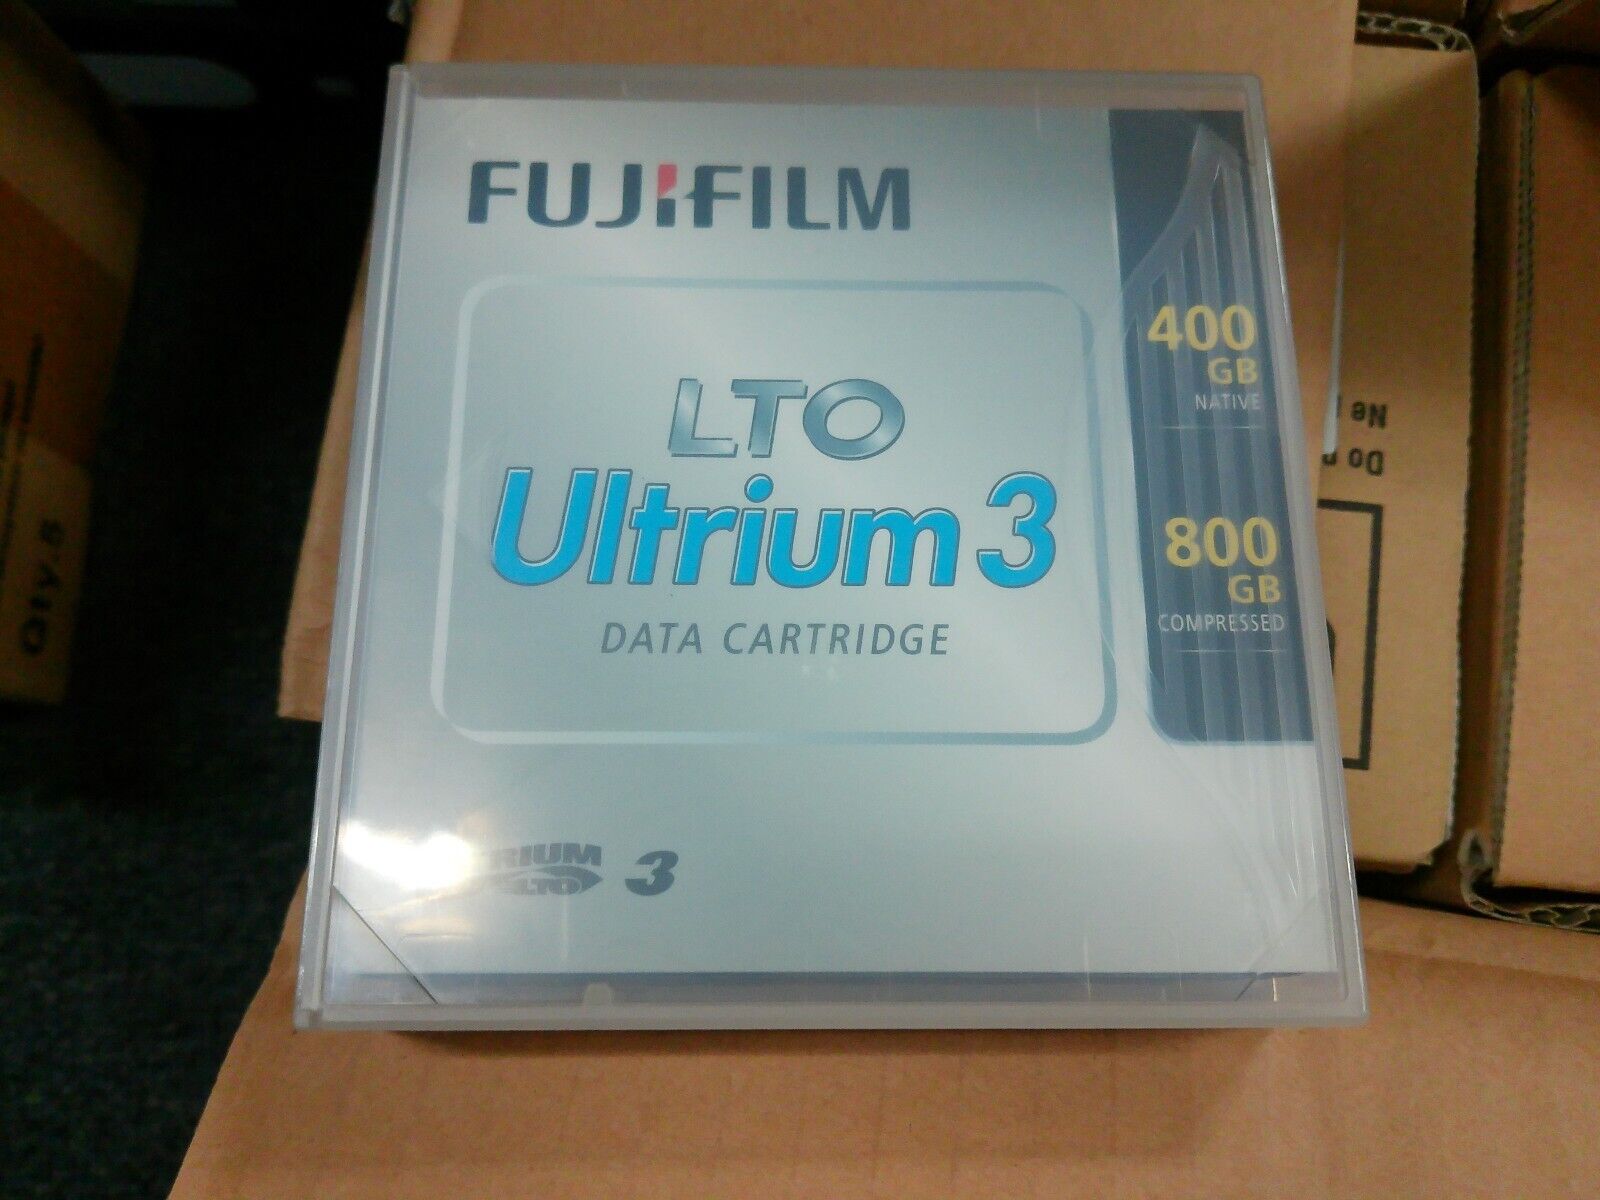 LTO Ultrium 3 Fujifilm 800 GB Data Cartridge 400GB Native / 800GB Compress.